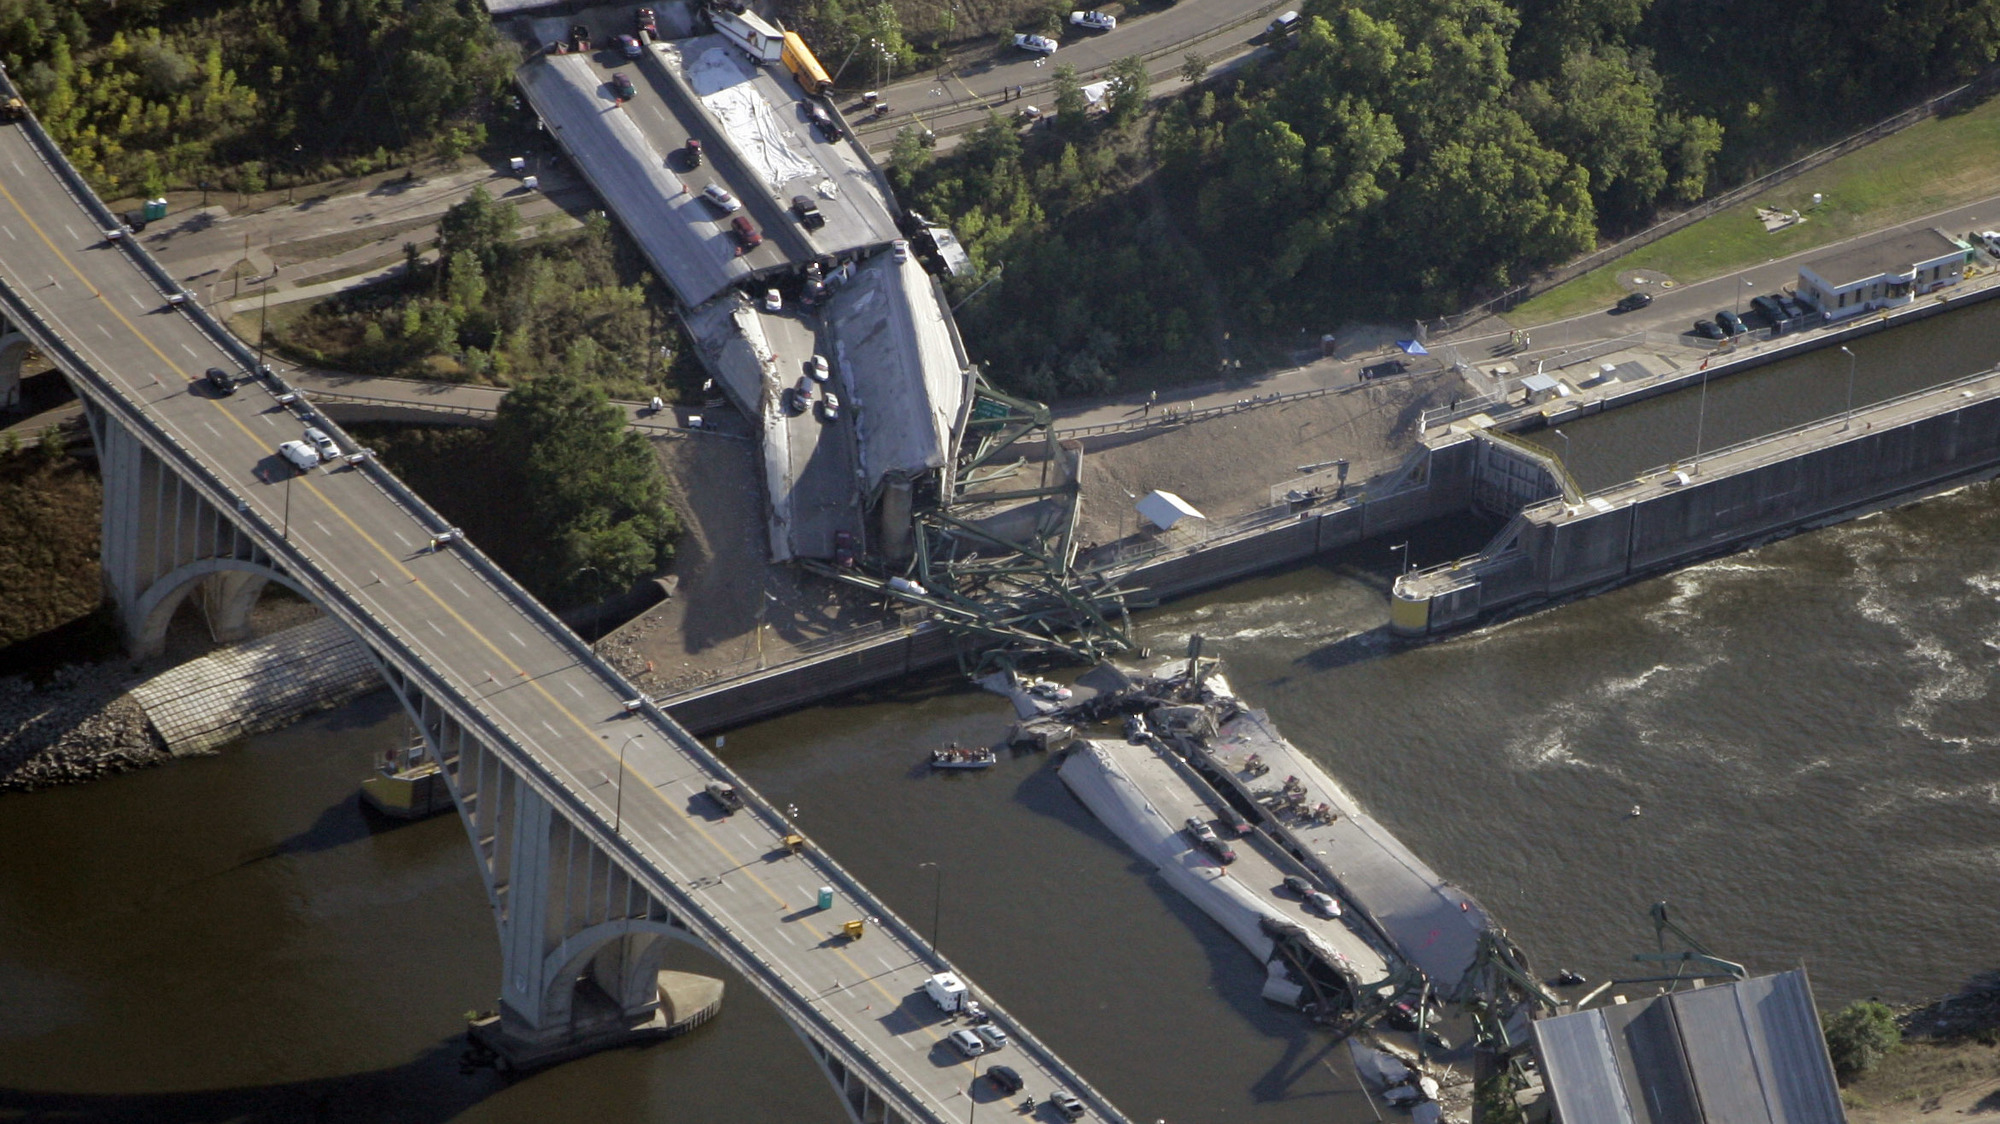 Корабль сломал мост. Мост i-35w через Миссисипи. 35 W Bridge Collapse. Обрушение моста в Миннеаполисе 2007. Мост через Миссисипи крушение.